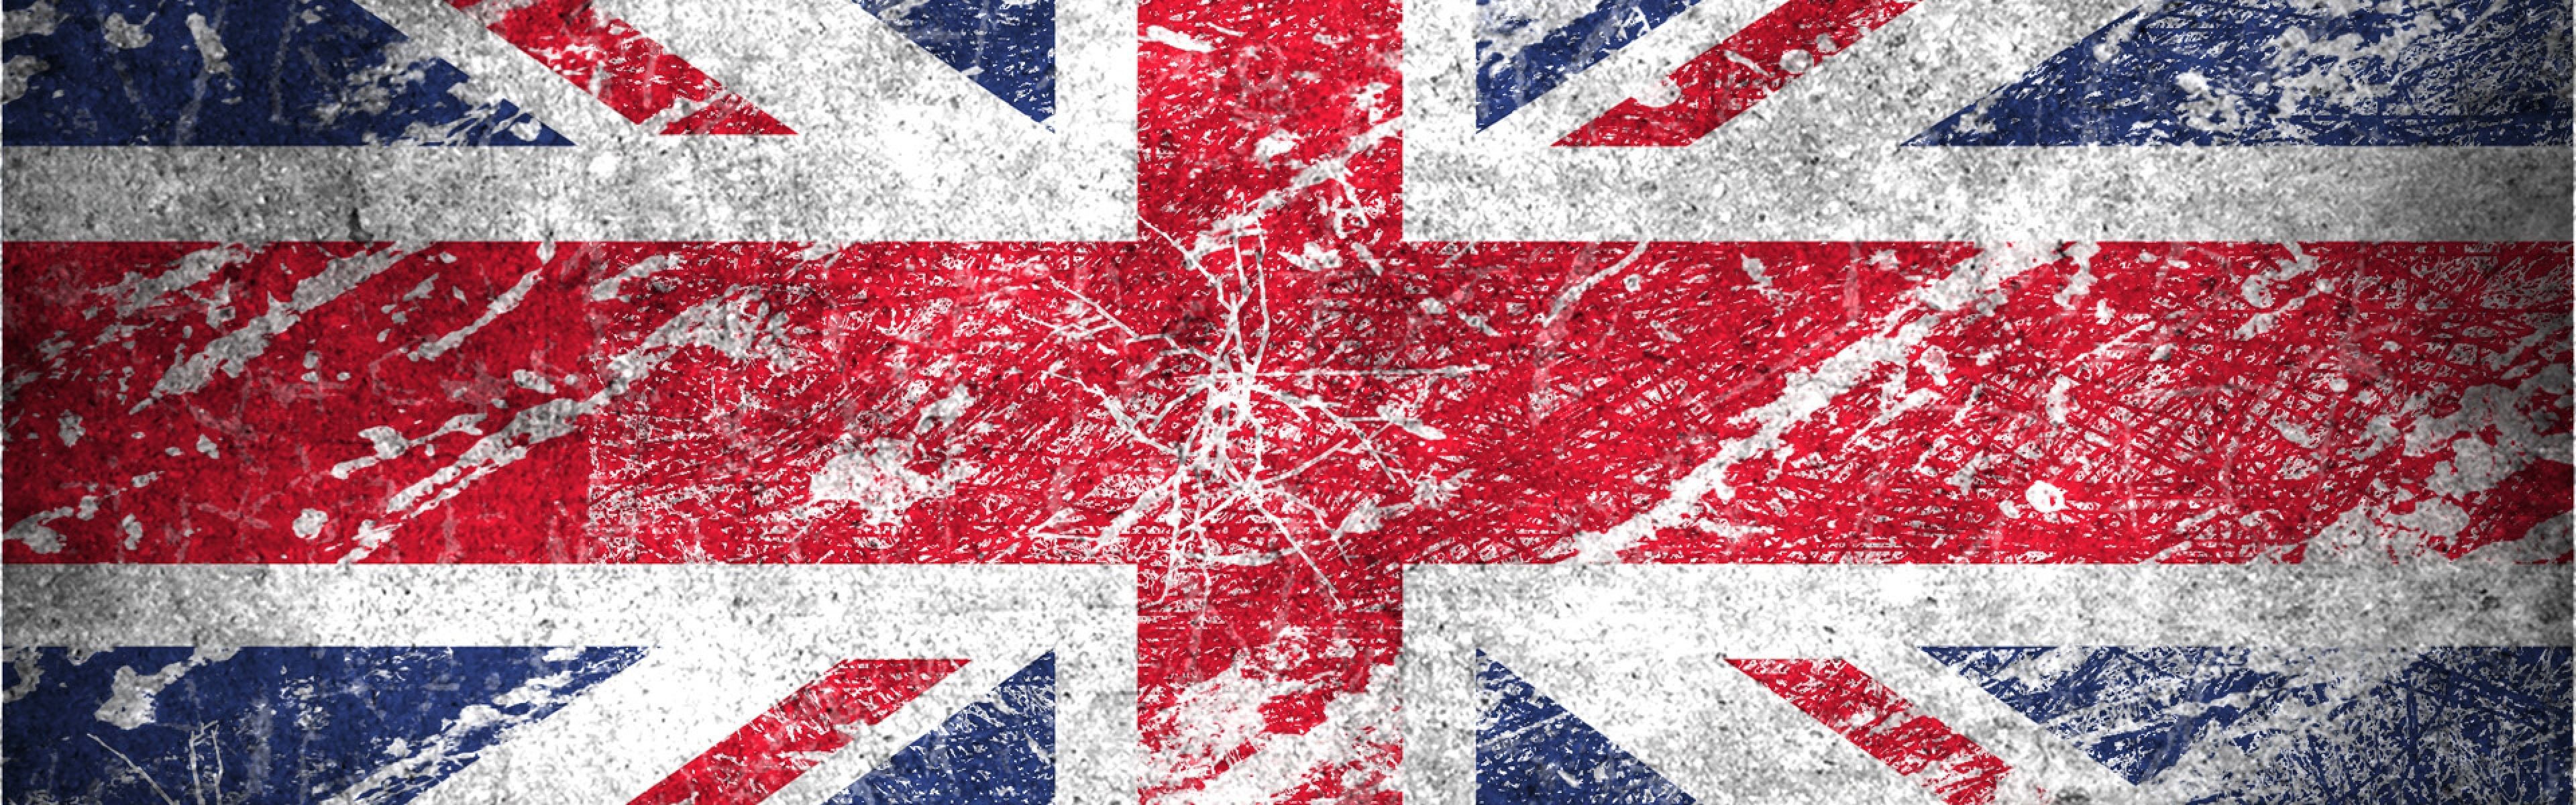 The best England flag wallpaper ideas. Usa flag